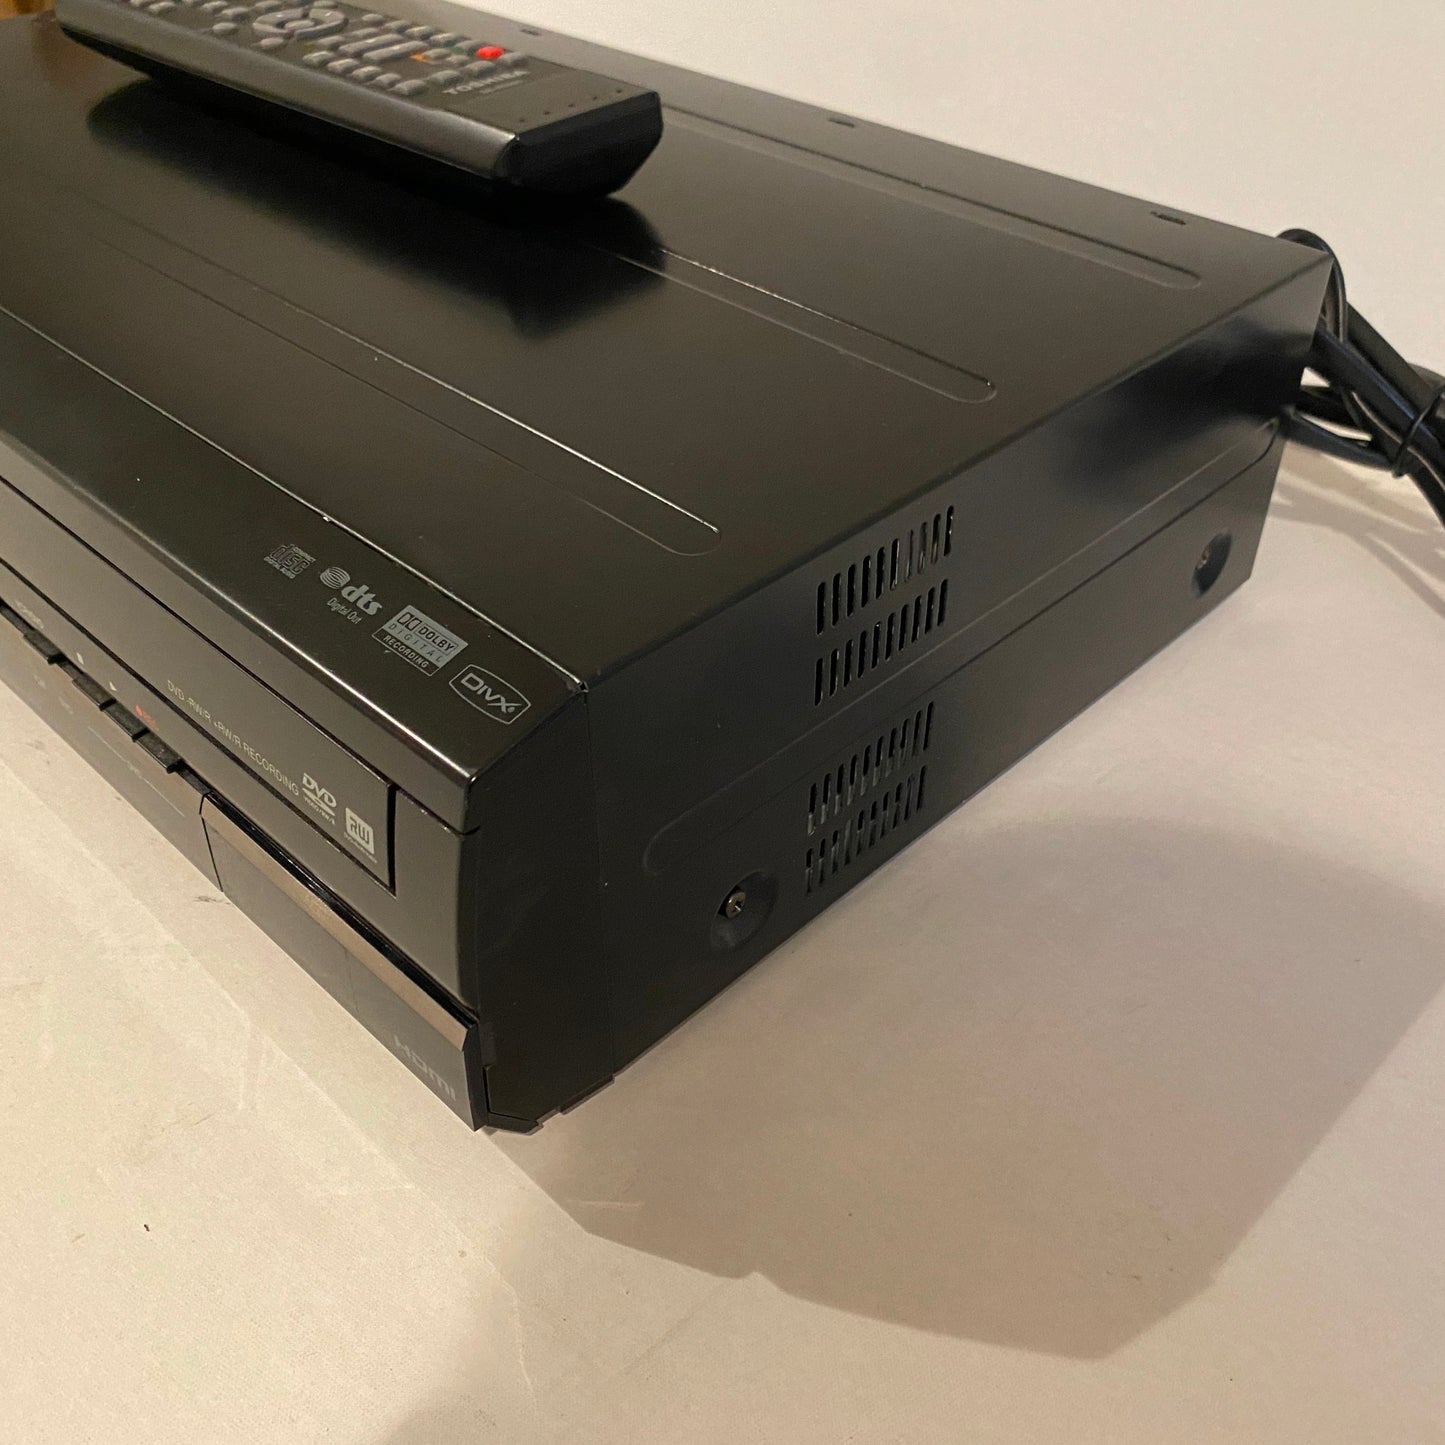 Toshiba Hi-Fi VCR & DVD Recorder with Remote - D-VR7